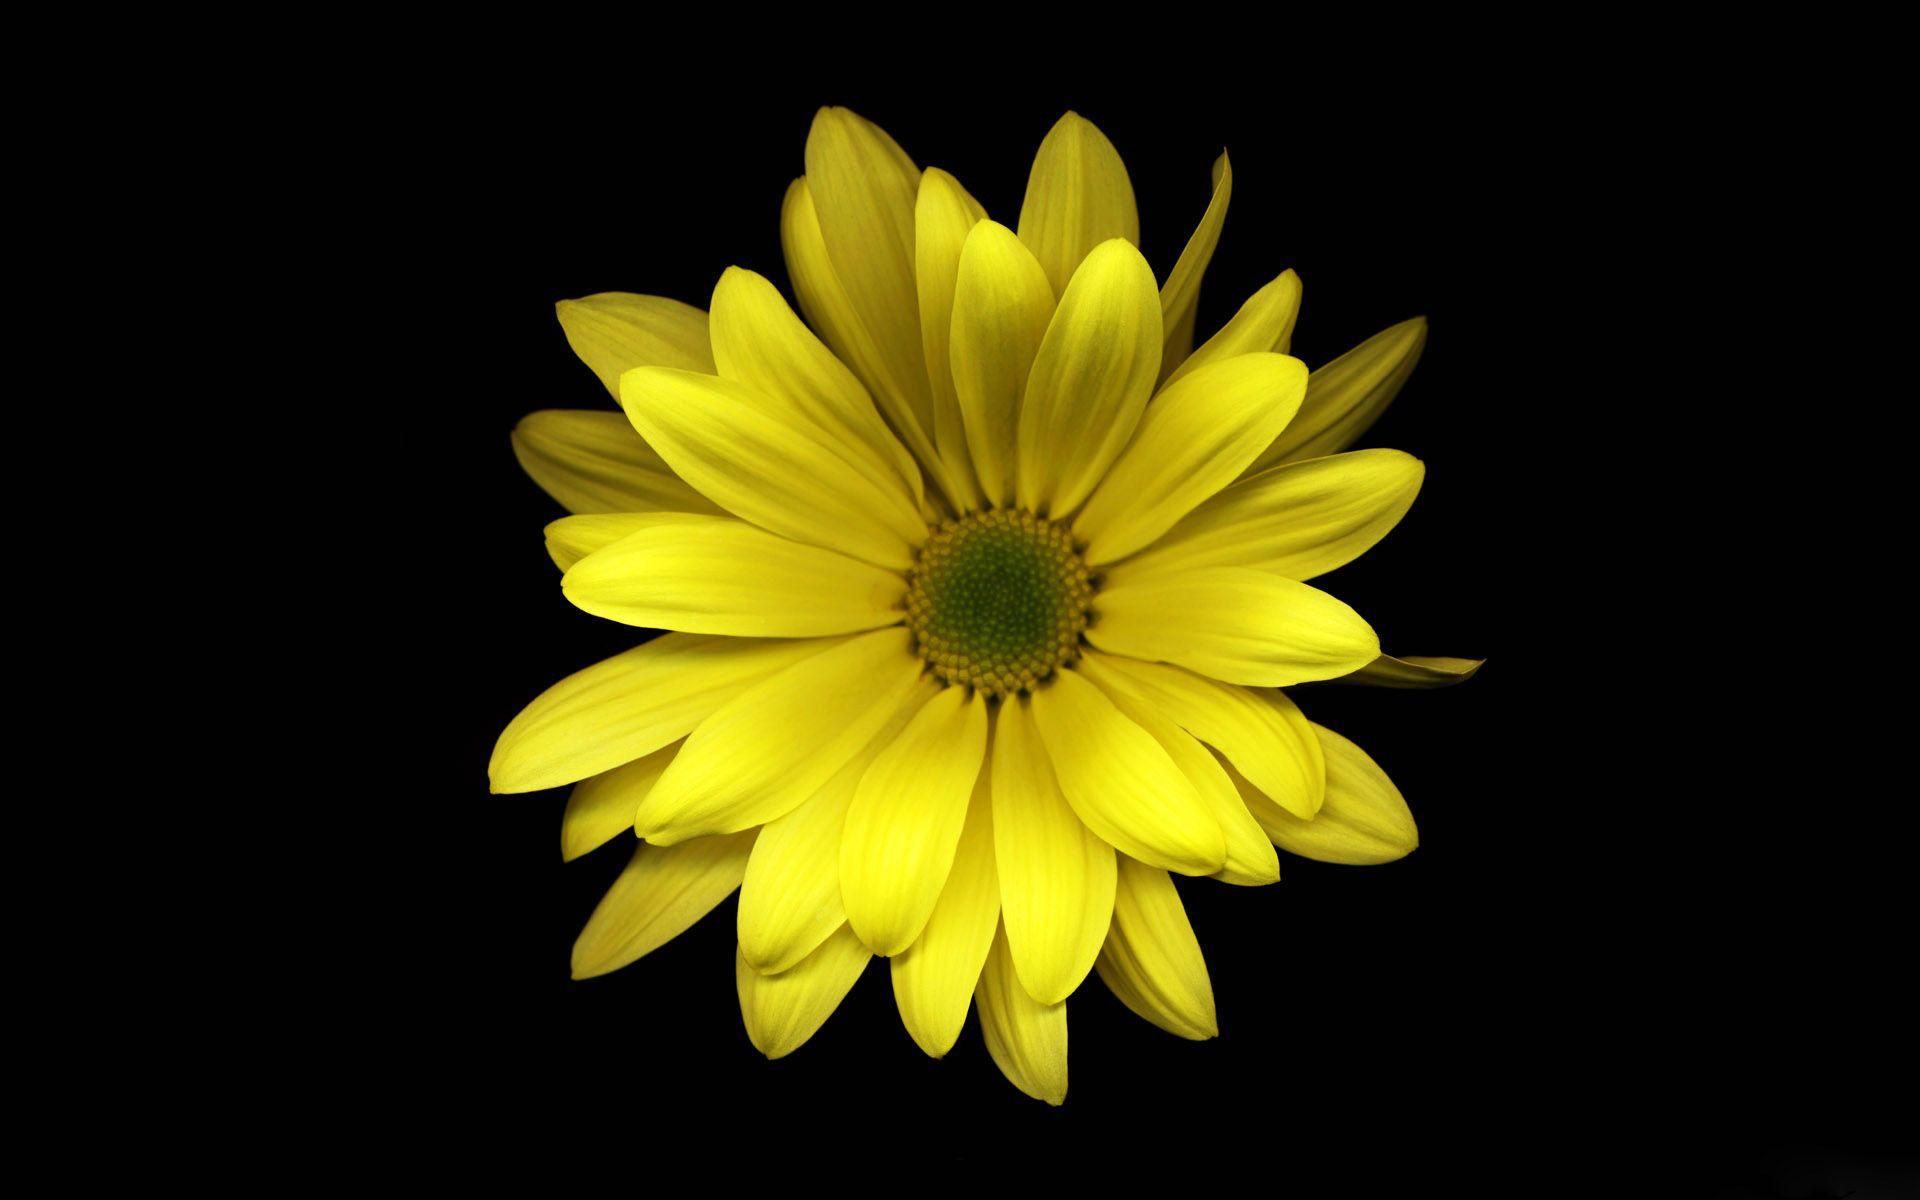 Desktop Wallpaper · Gallery · Windows 7 · Yellow flower free